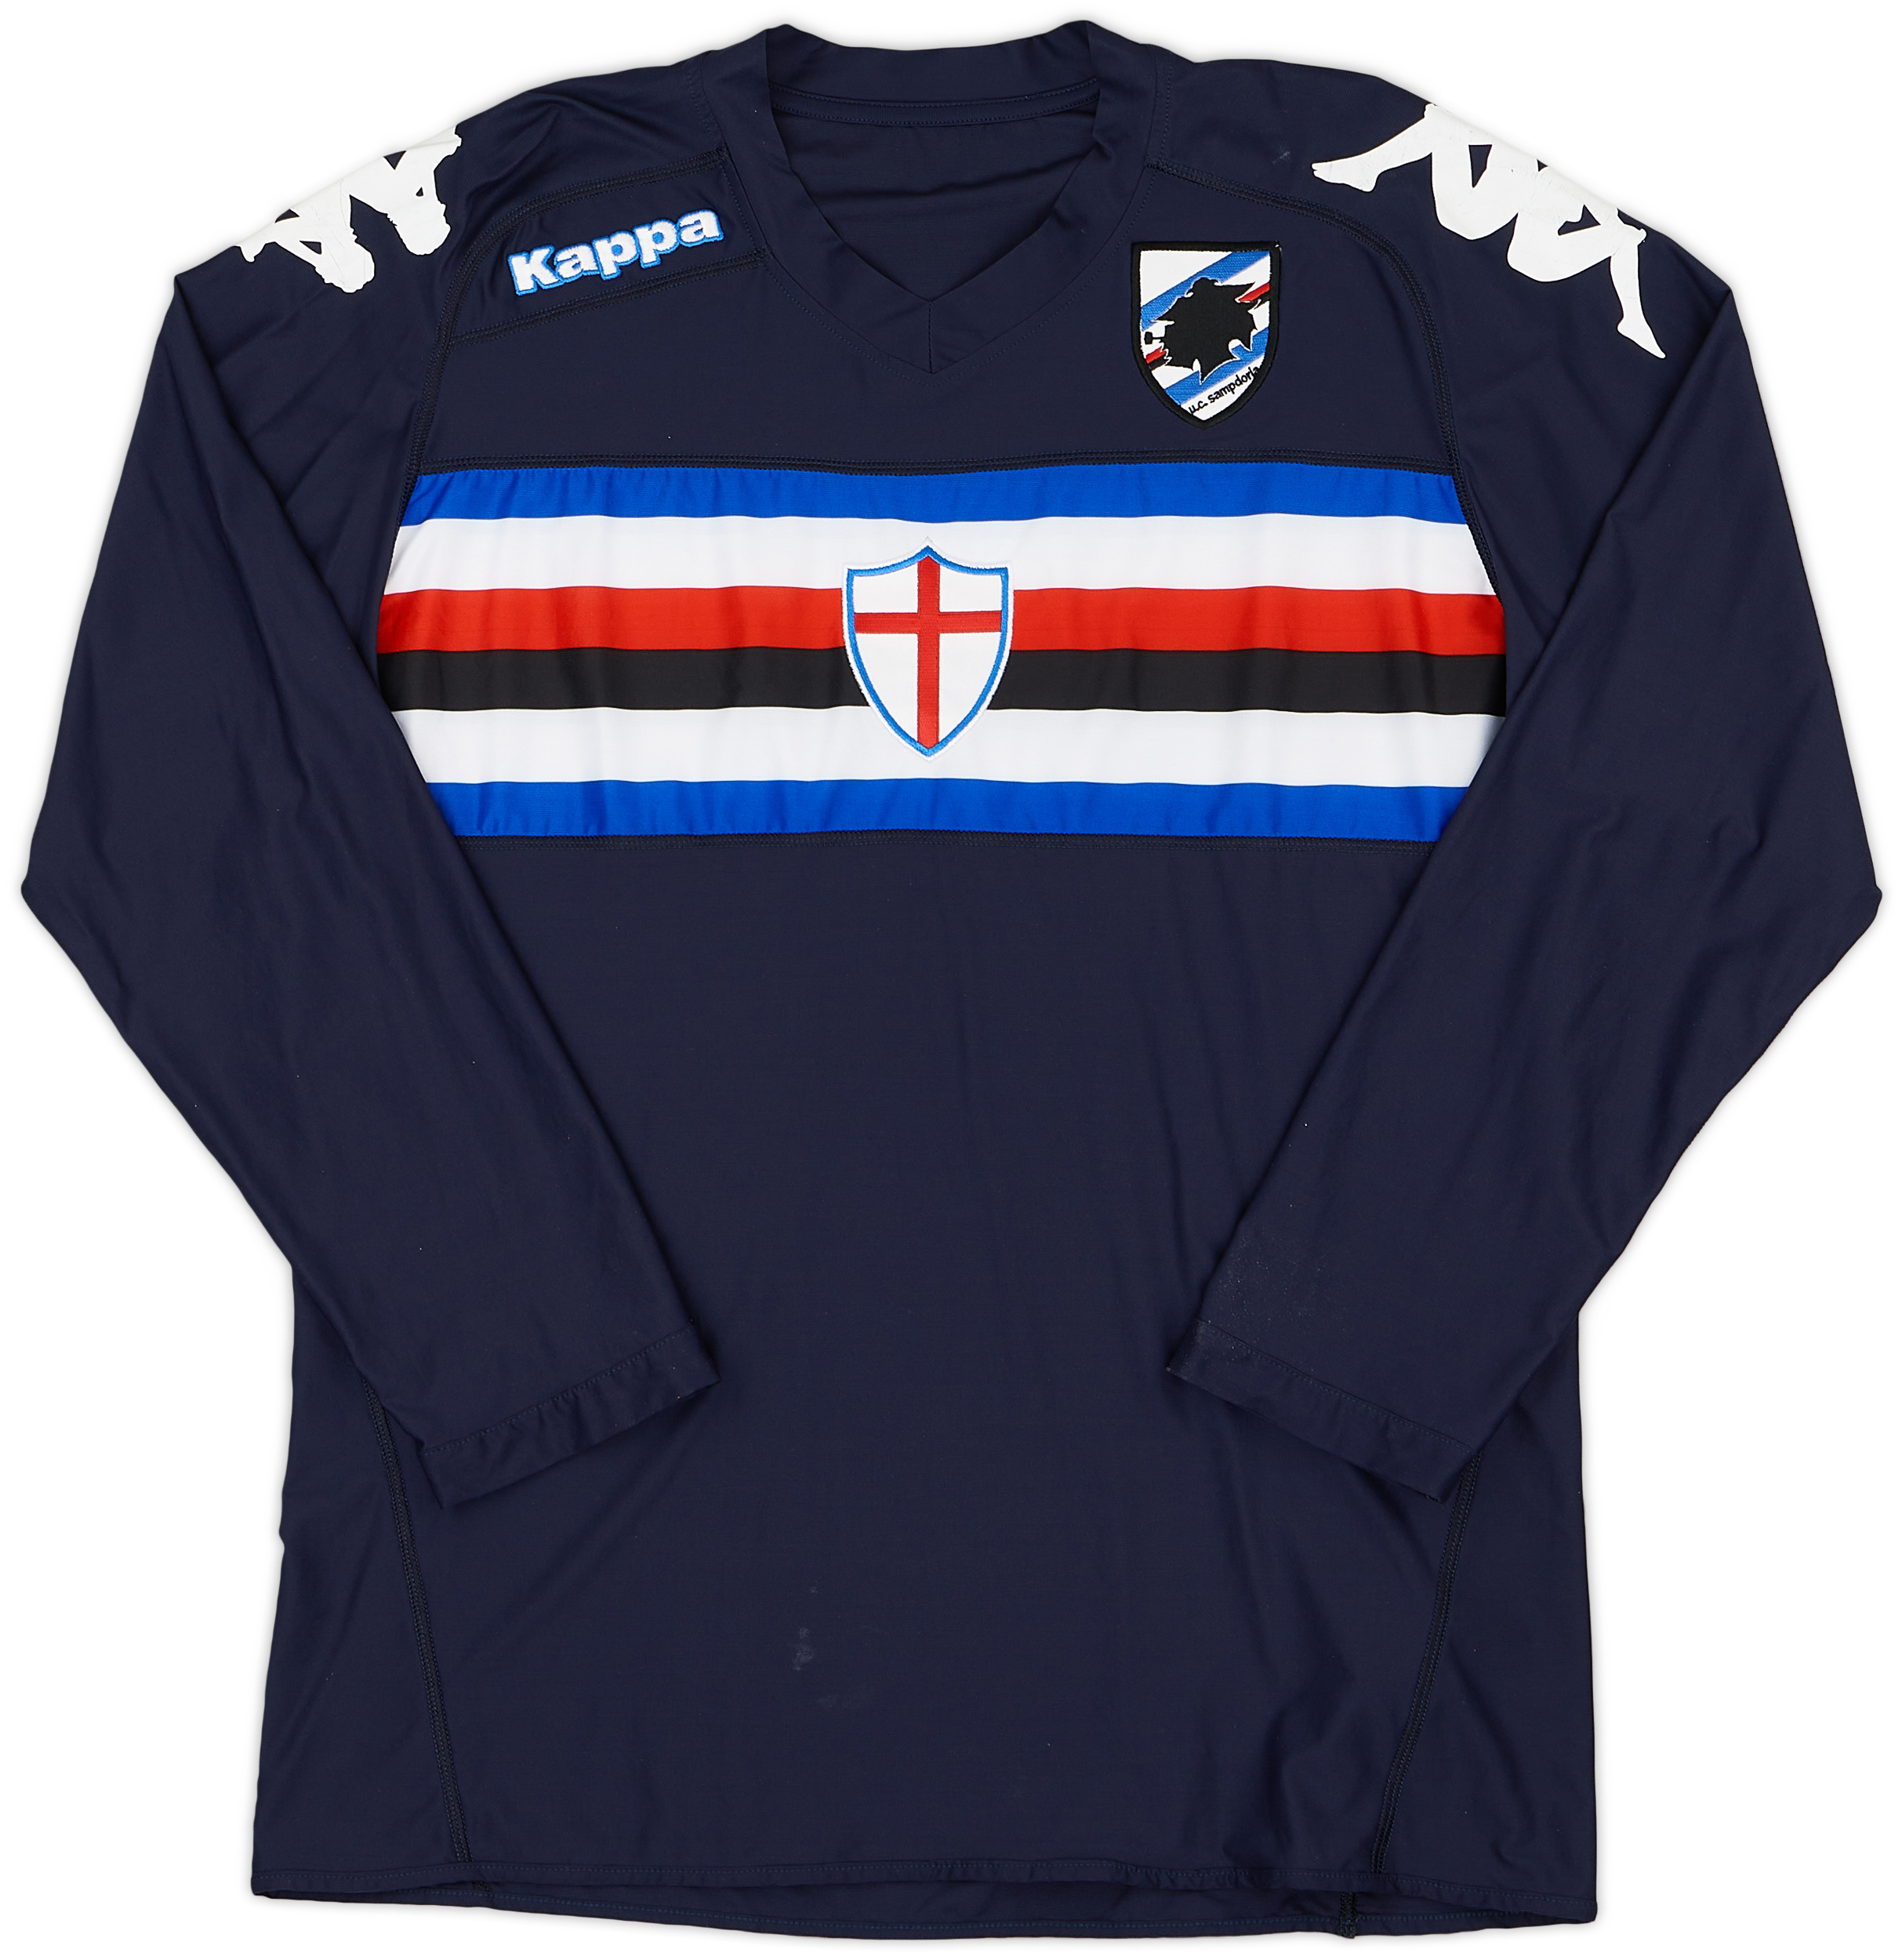 Sampdoria  Terceira camisa (Original)